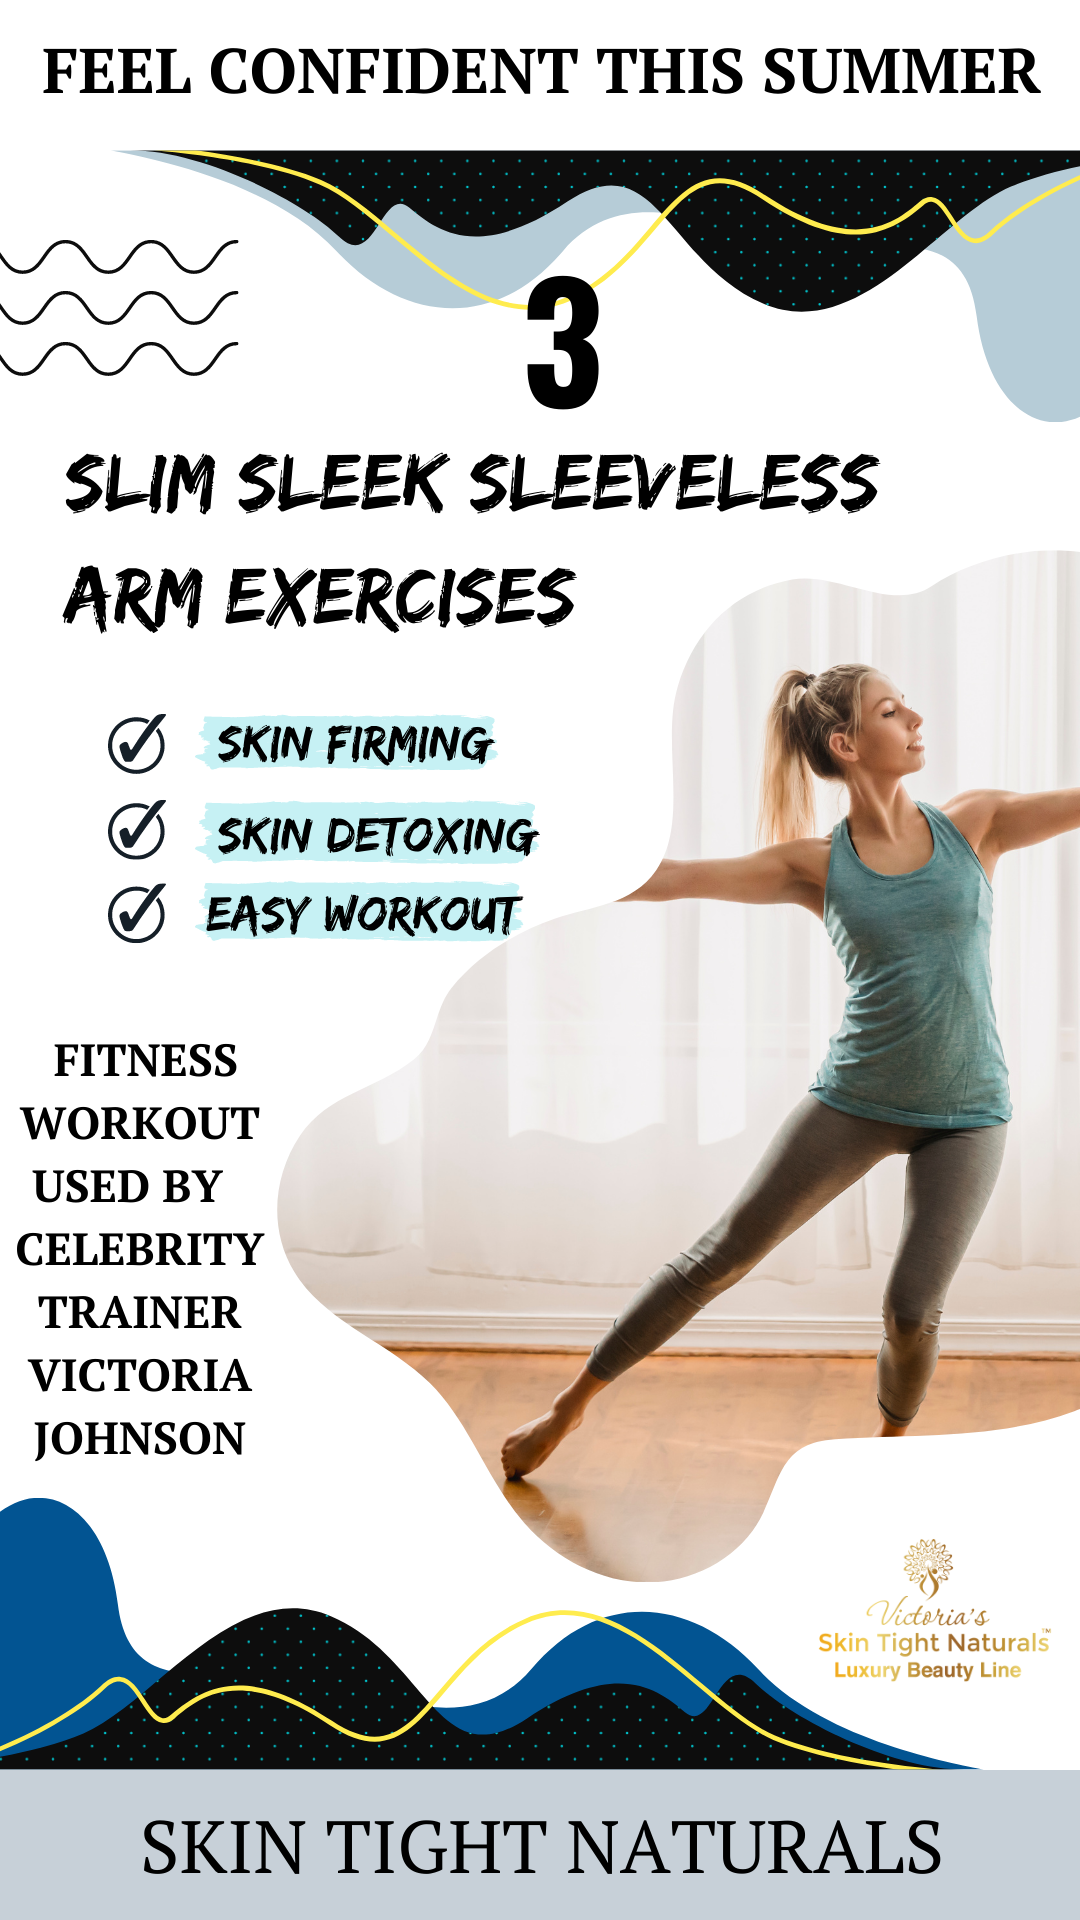 Slim Sleek Sleeveless Arms For The Summer